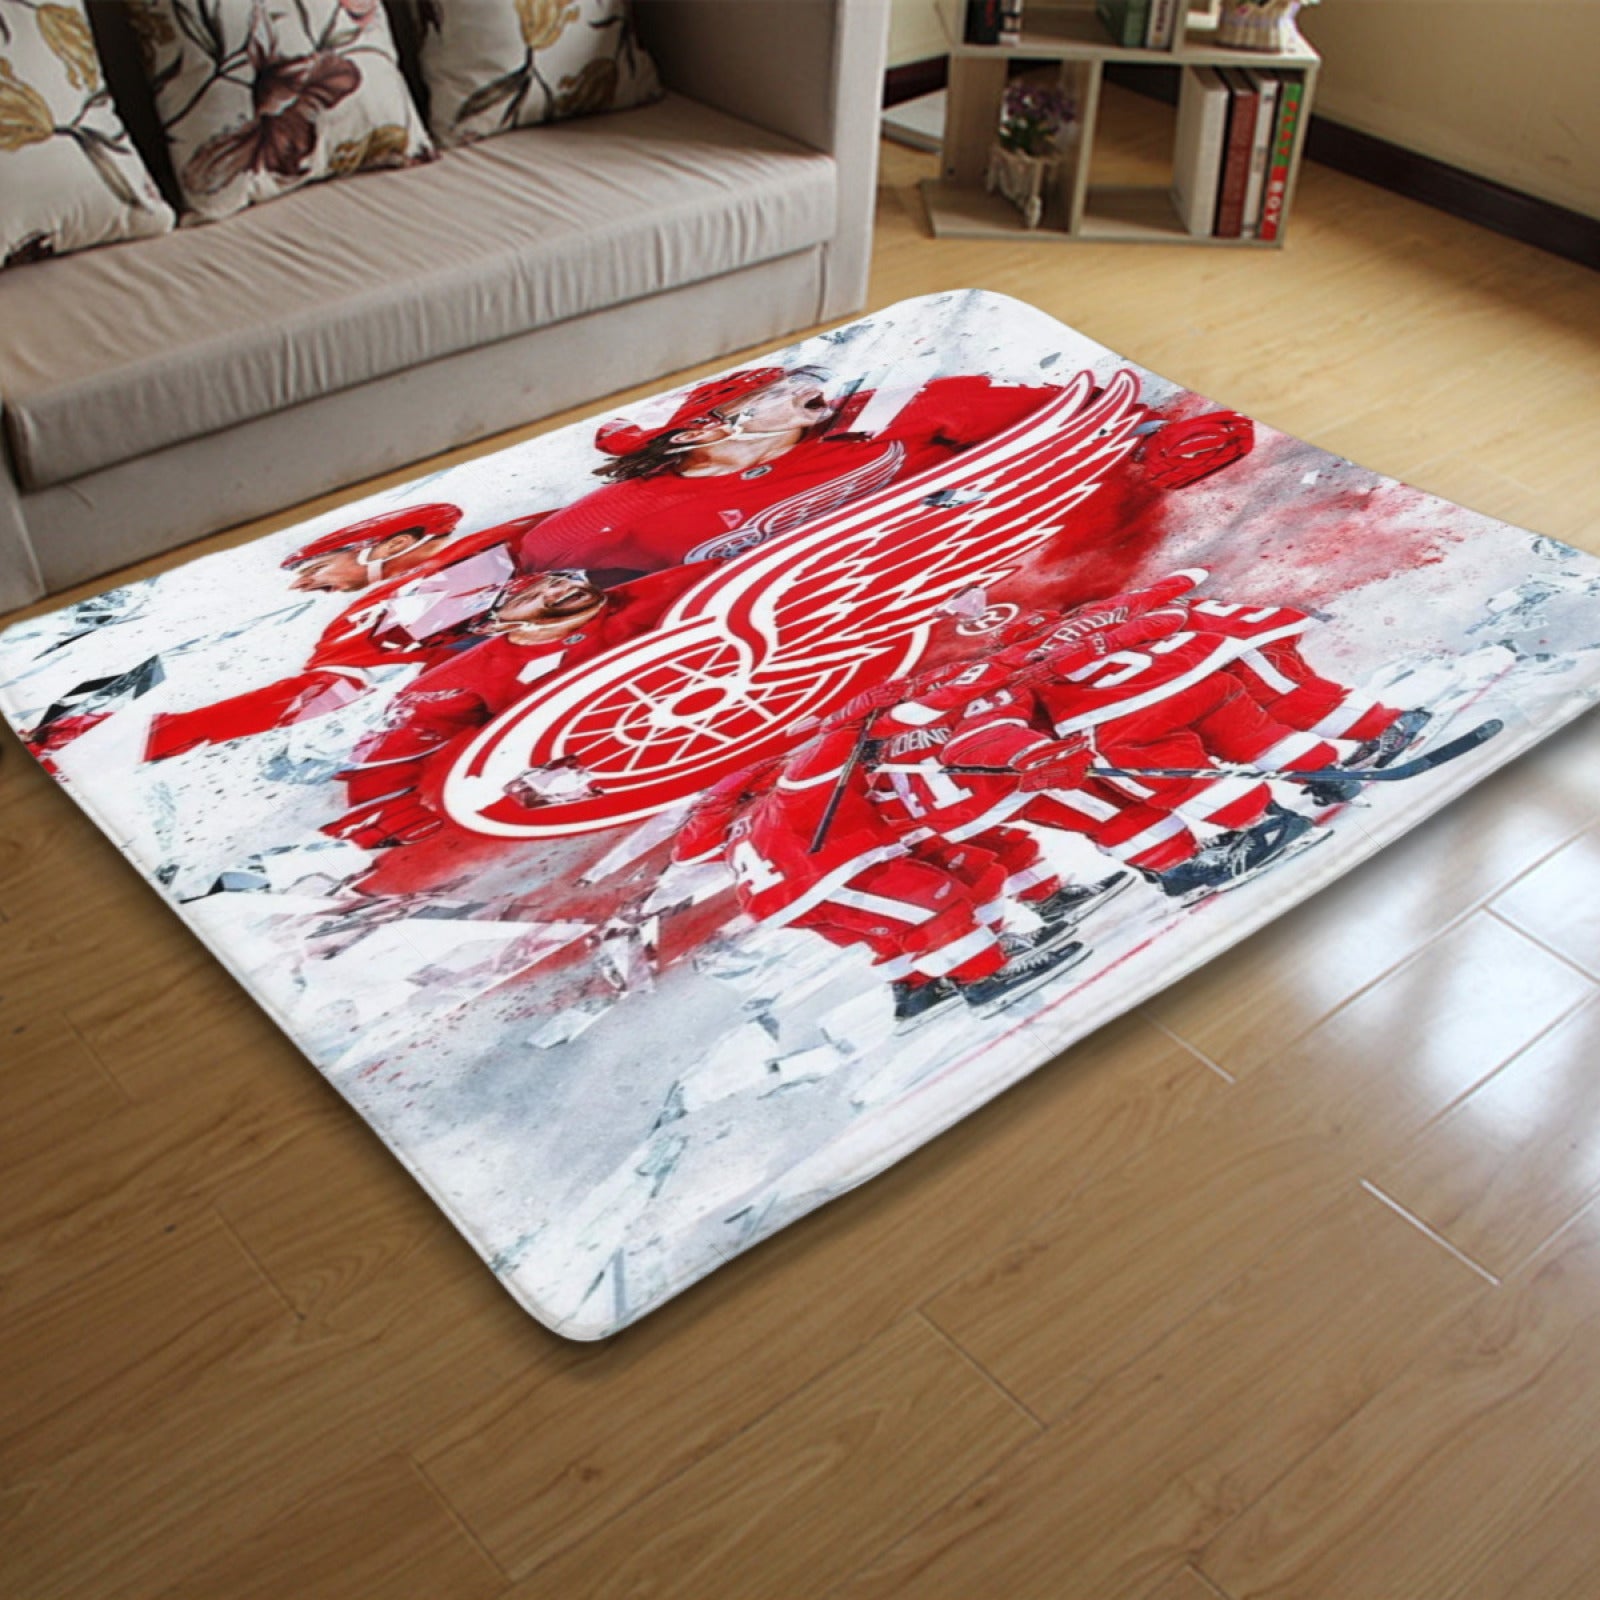 Detroit Red Wings Hockey League Carpet Living Room Bedroom Mats Kitchen Bathroom Rugs